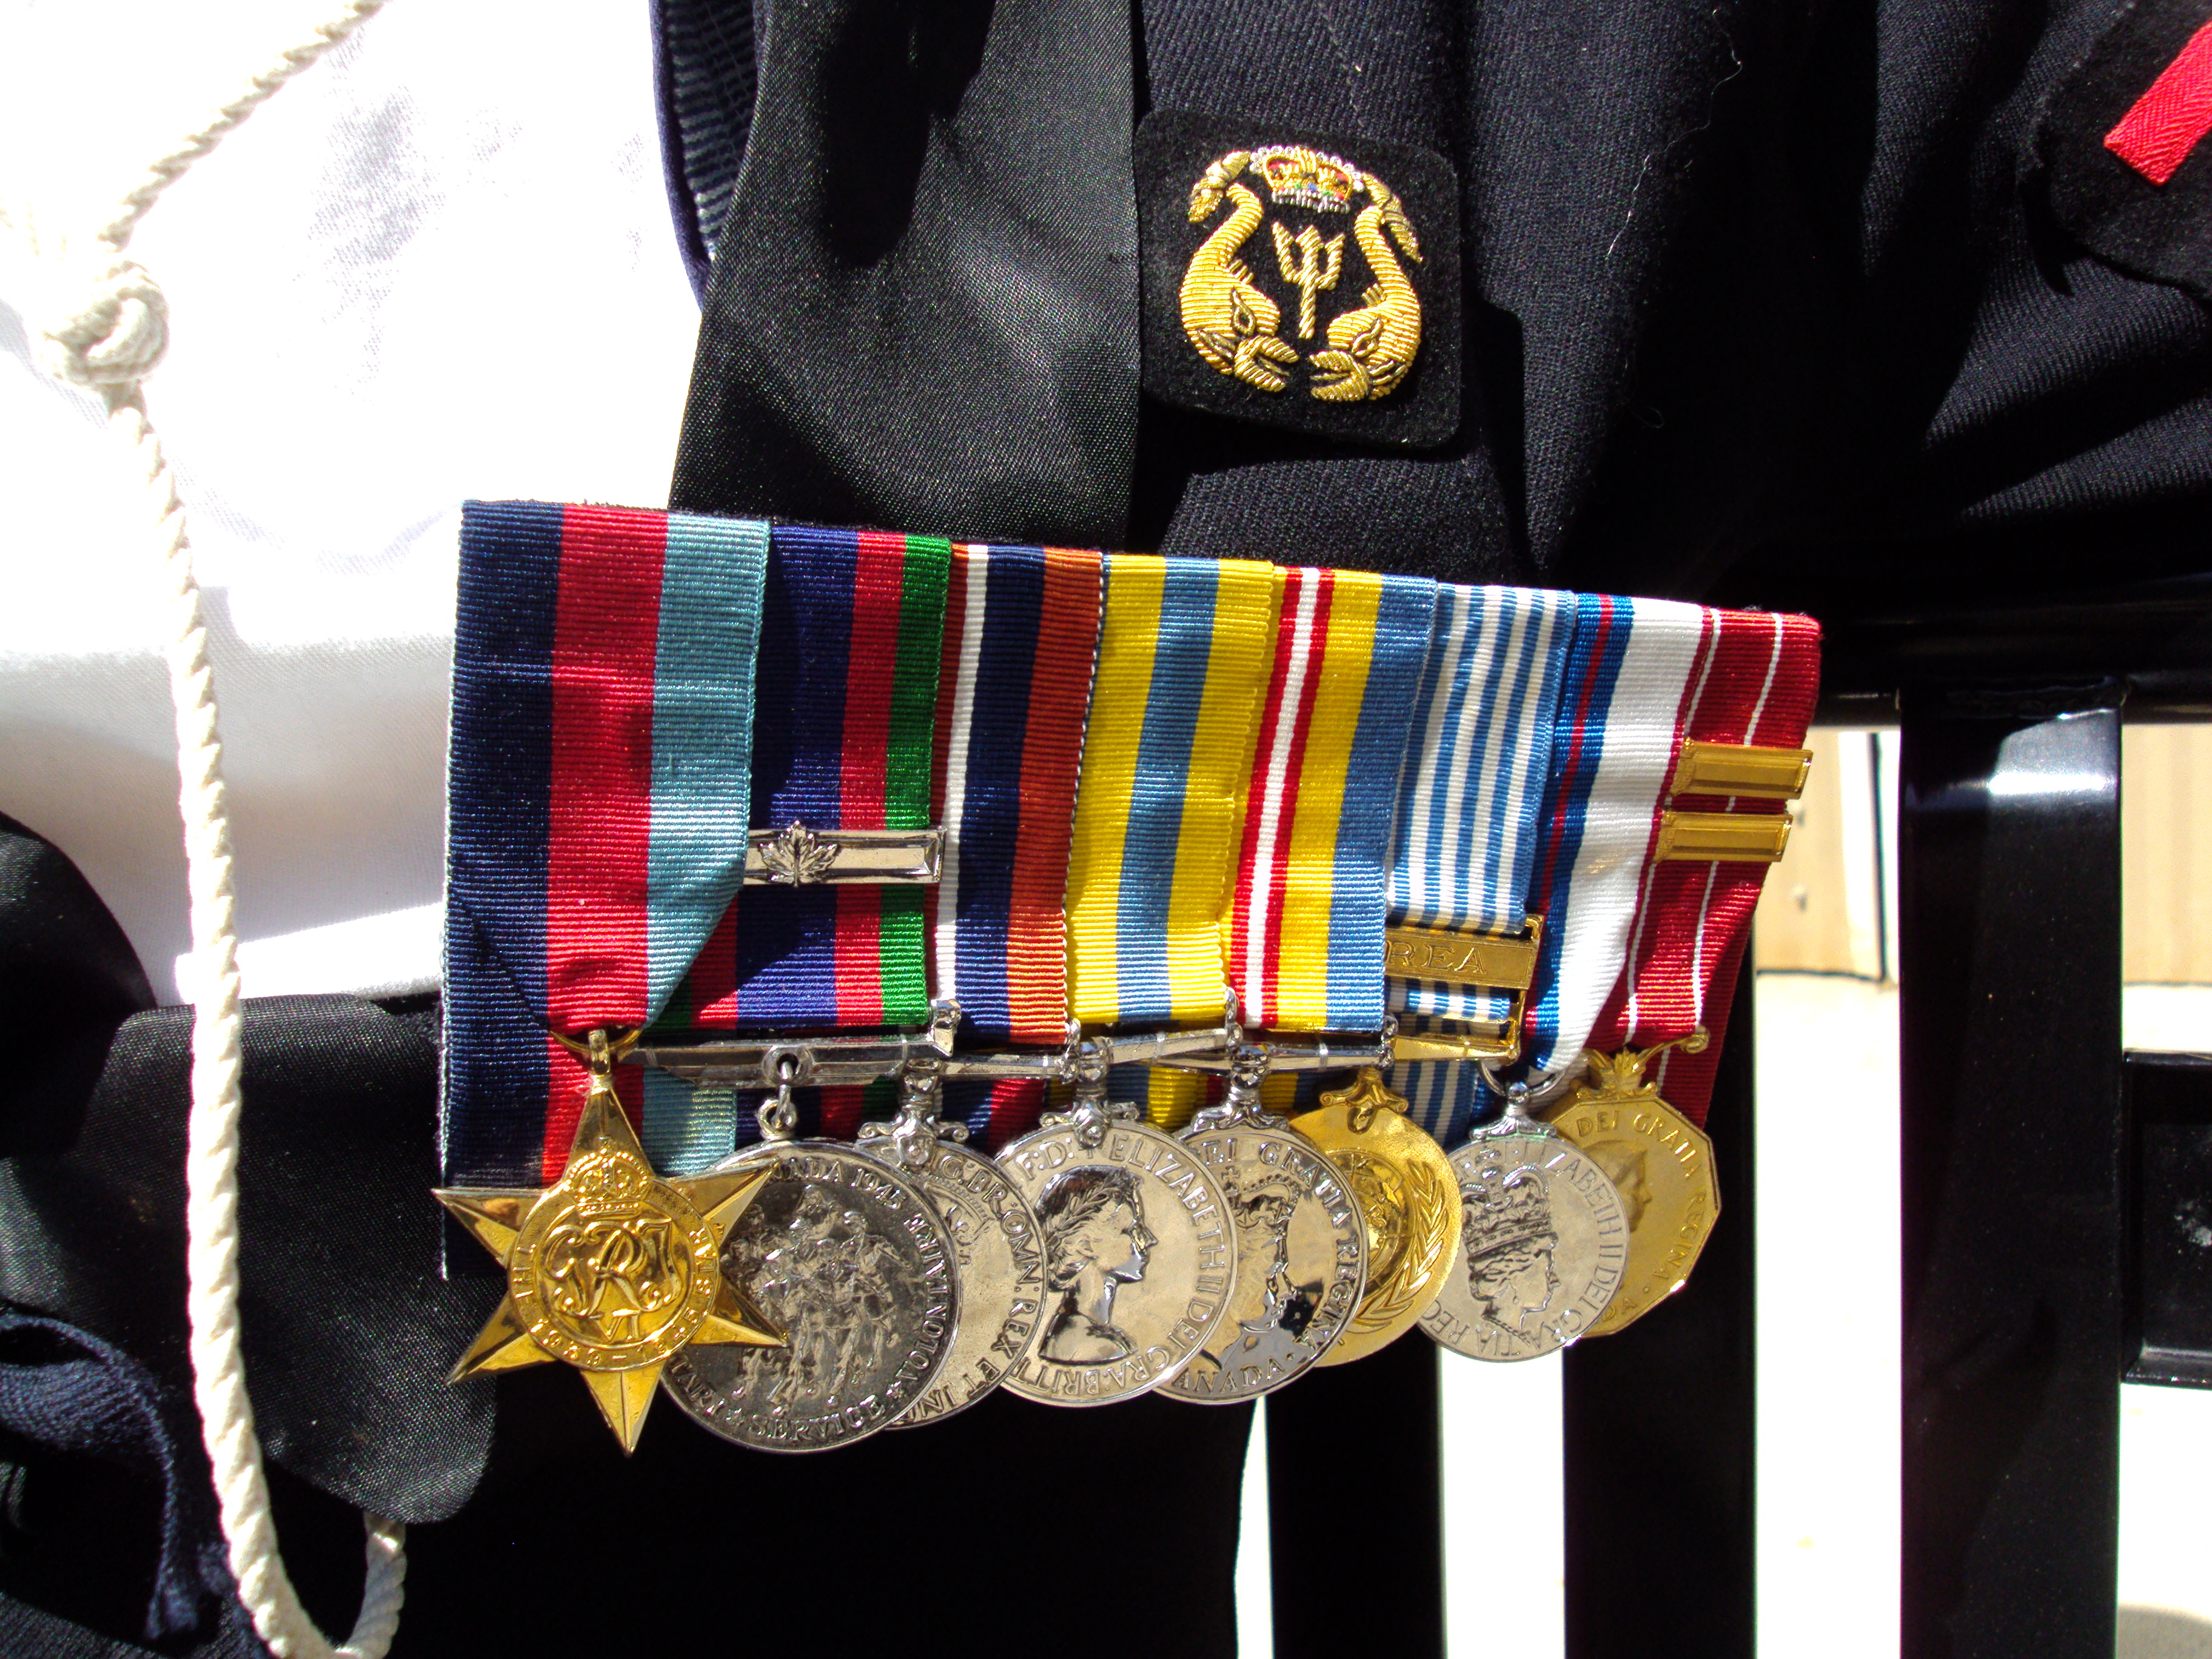 Captain John Mason's medals.